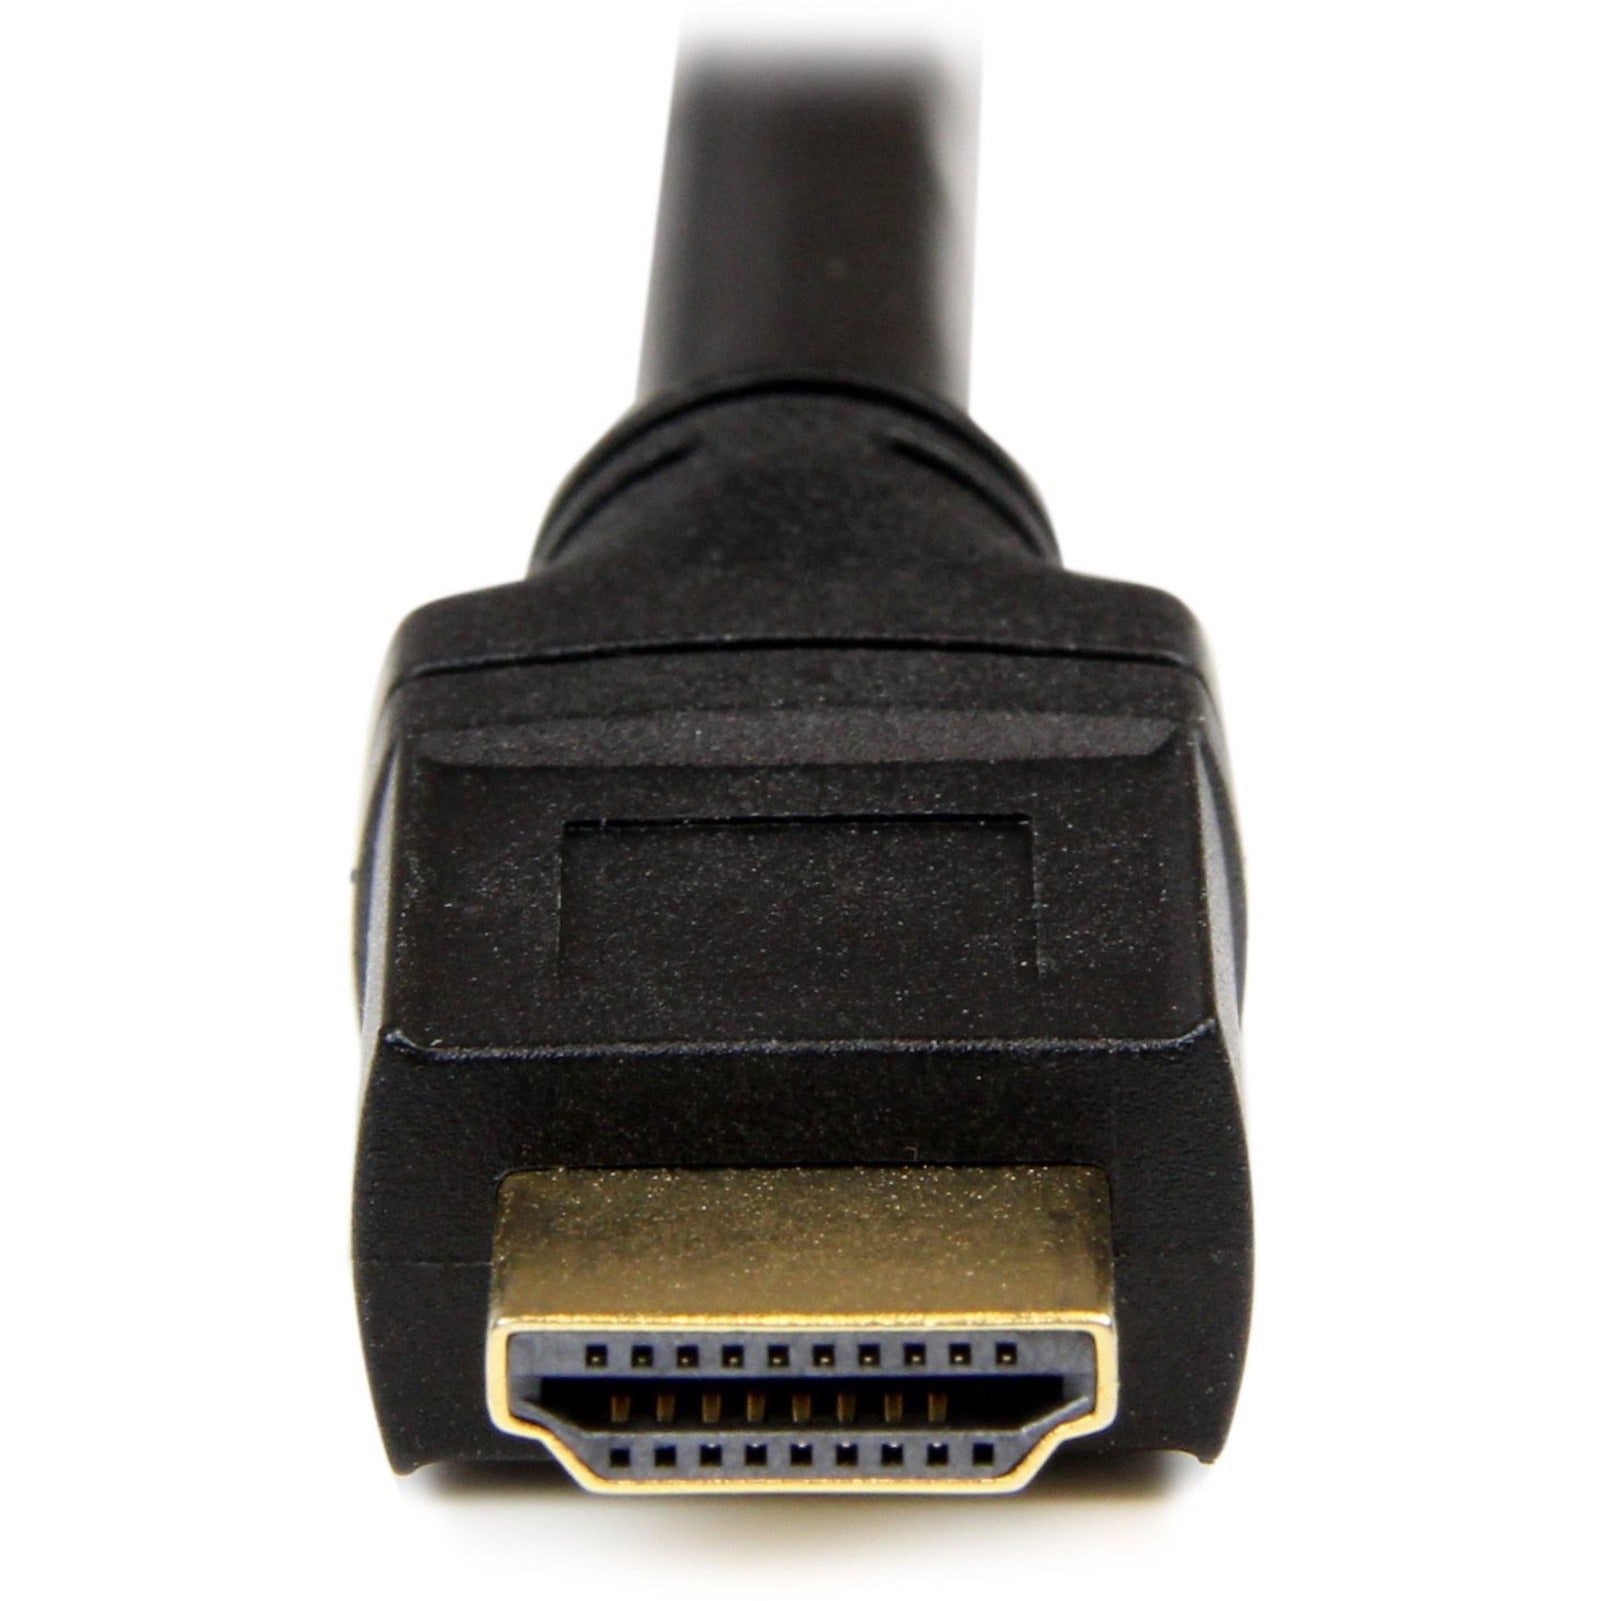 StarTech.com HDPMM25 كابل HDMI عالي السرعة معتمد بمعايير الفلين 25 قدم - HDMI إلى HDMI - ذكر إلى ذكر، معدل نقل بيانات 10.2 جيجابت في الثانية، دقة مدعومة 4096 x 2160.